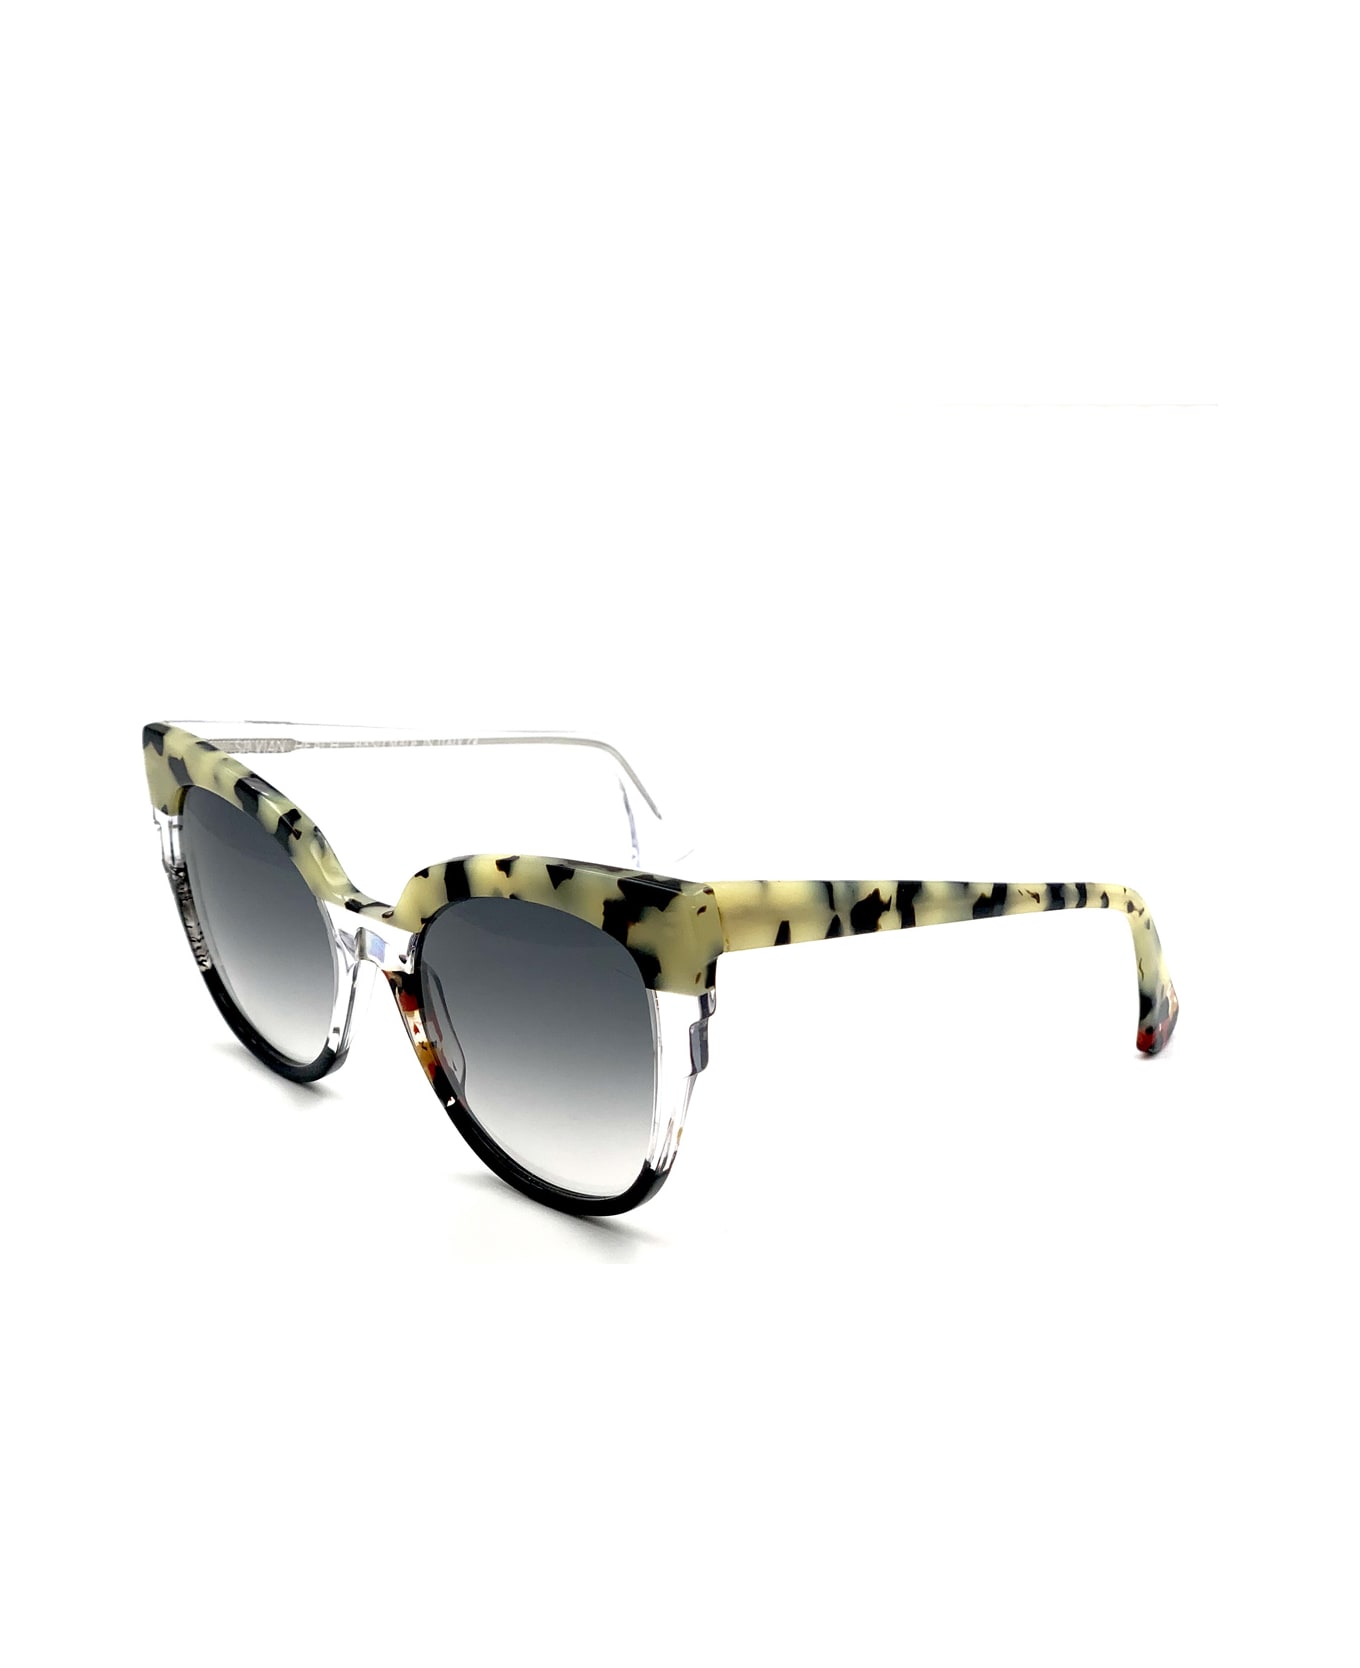 Silvian Heach Jumble 492 Sunglasses - Multicolore サングラス